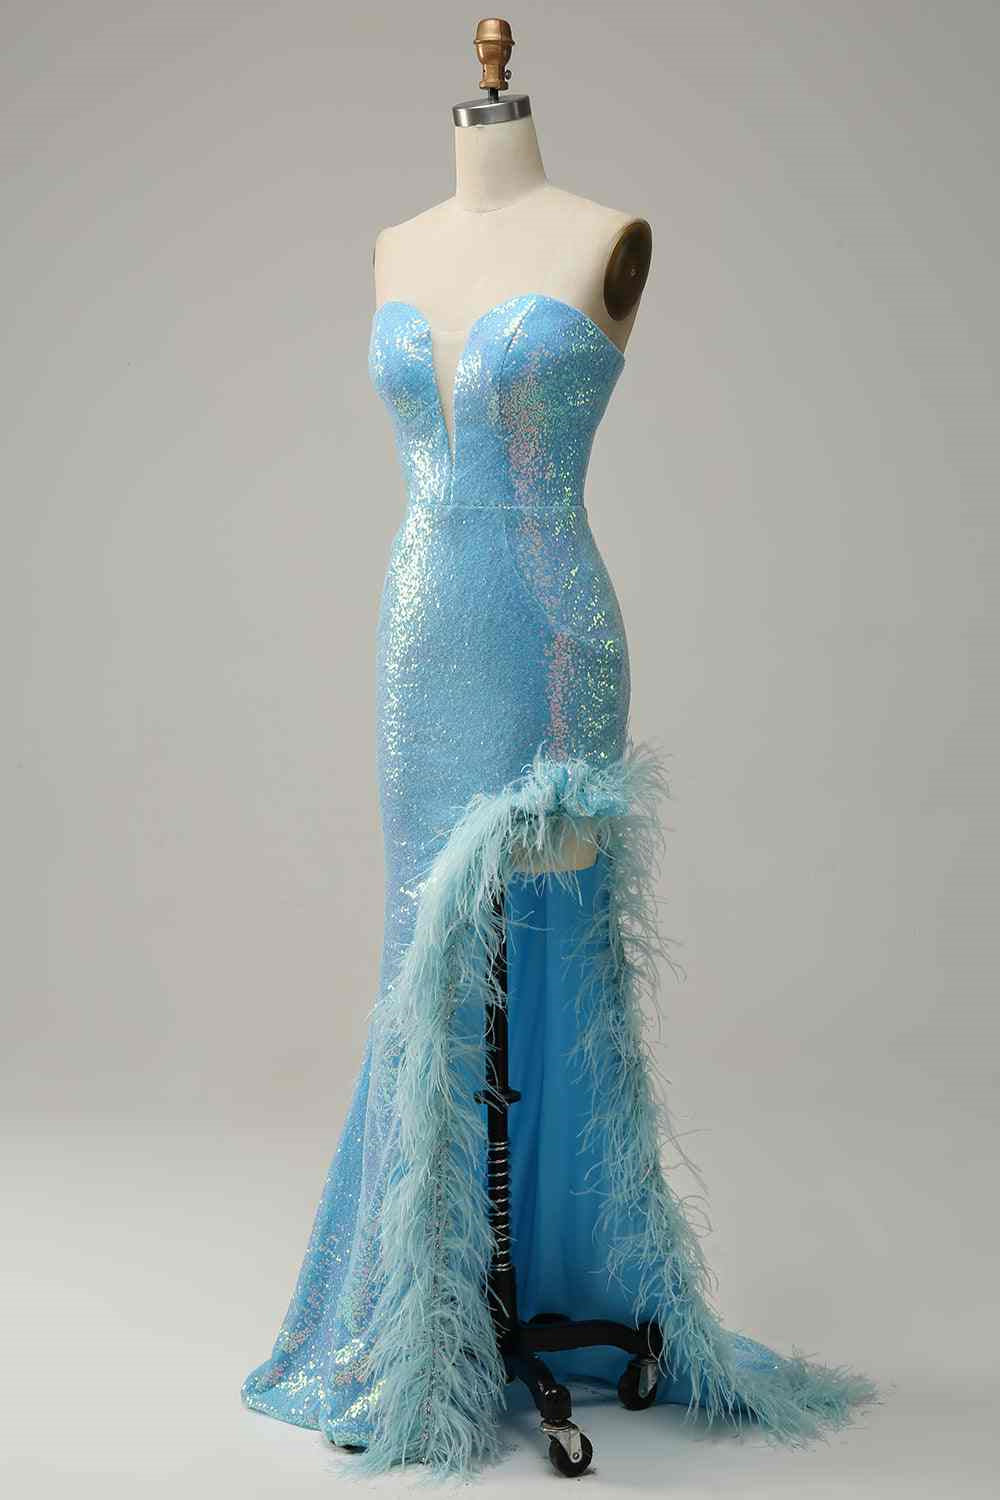 Sky Blue Mermaid Strapless Sparkly Long Formal Dress